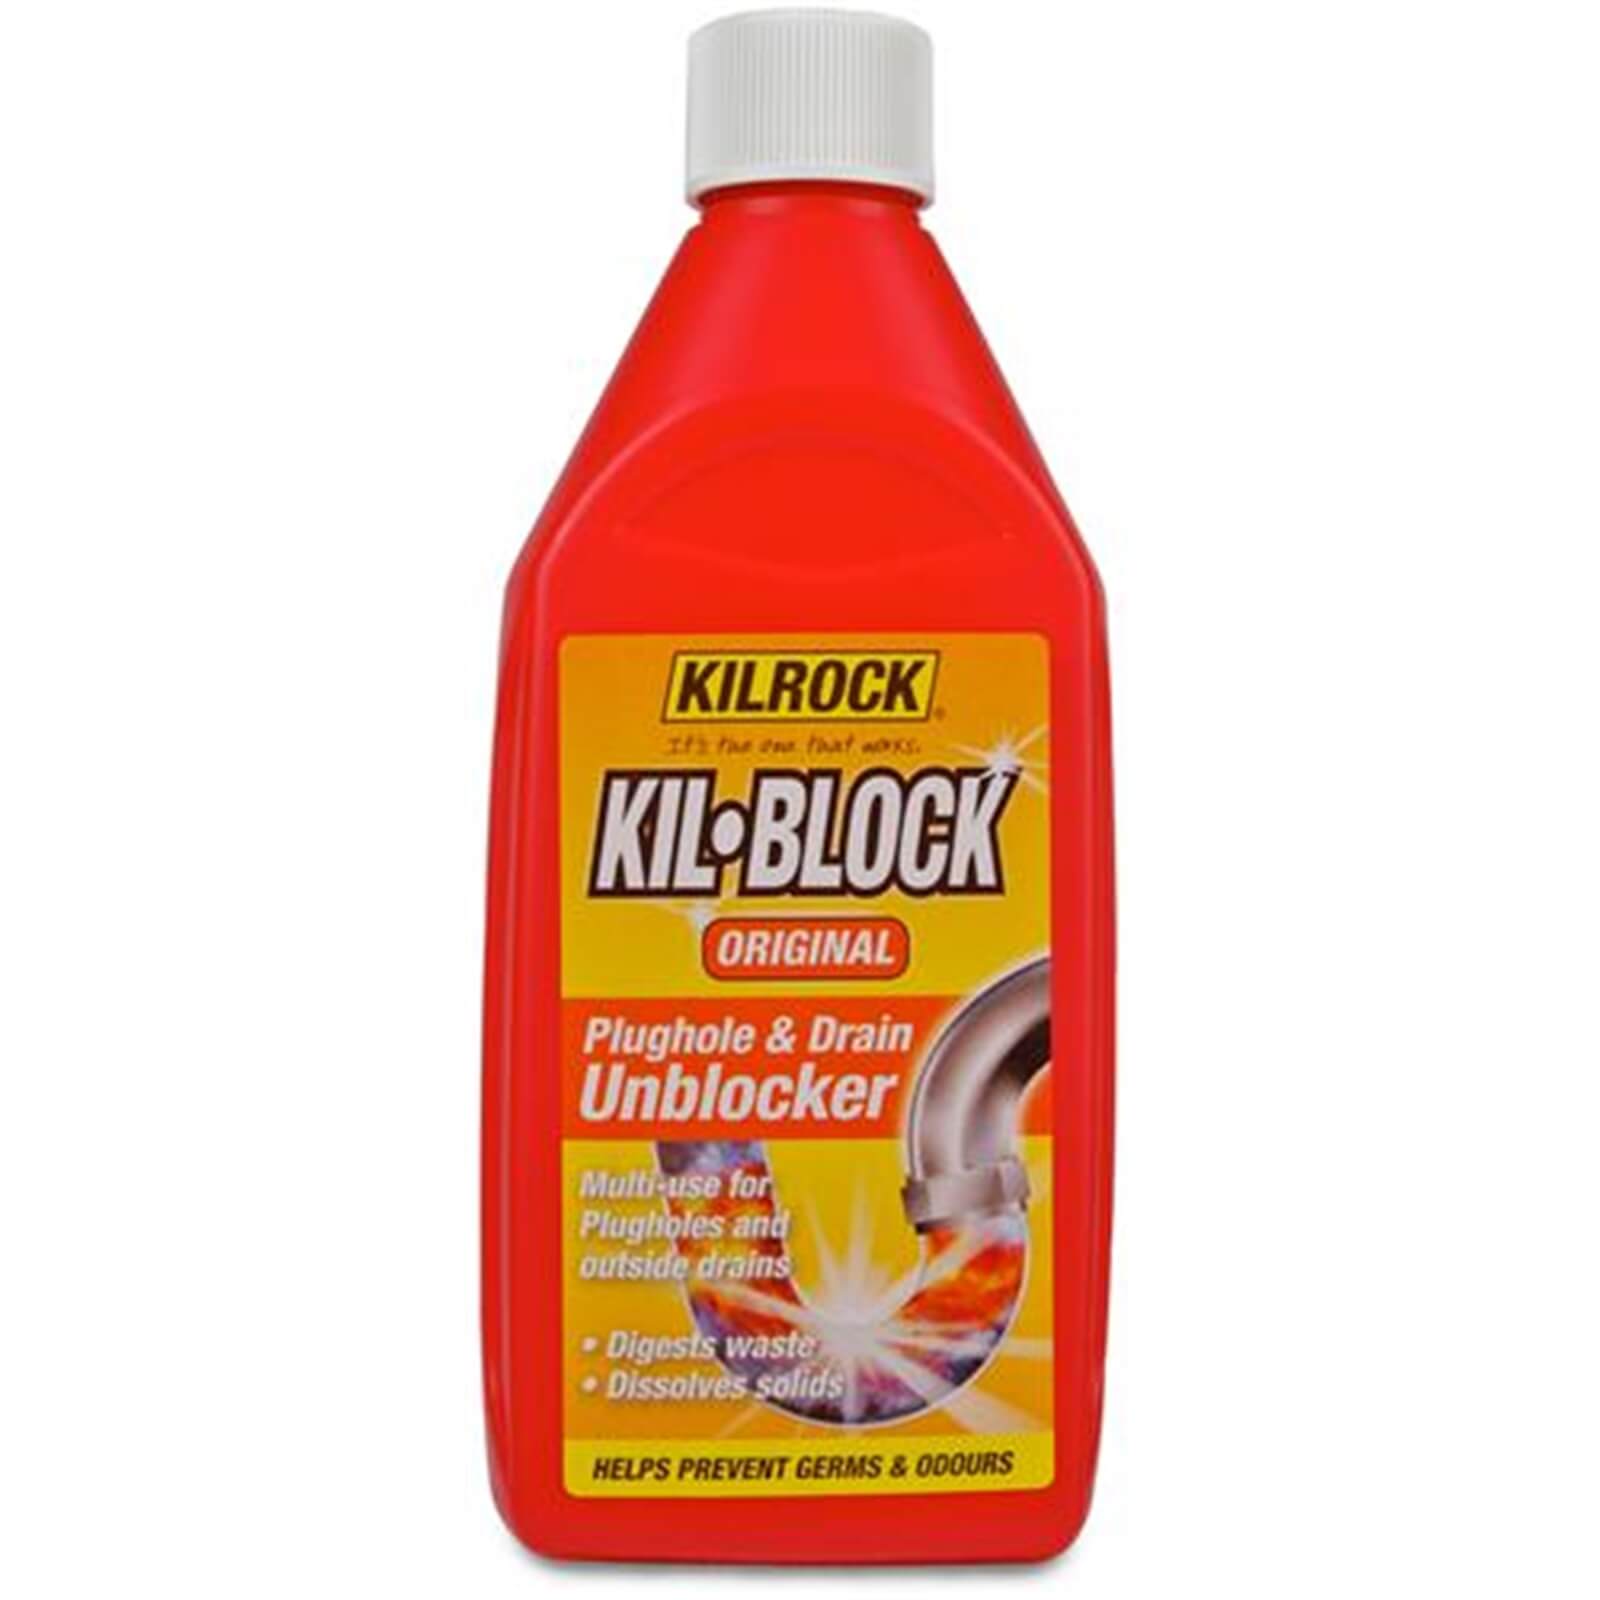 Kil-Block Plughole Unblocker